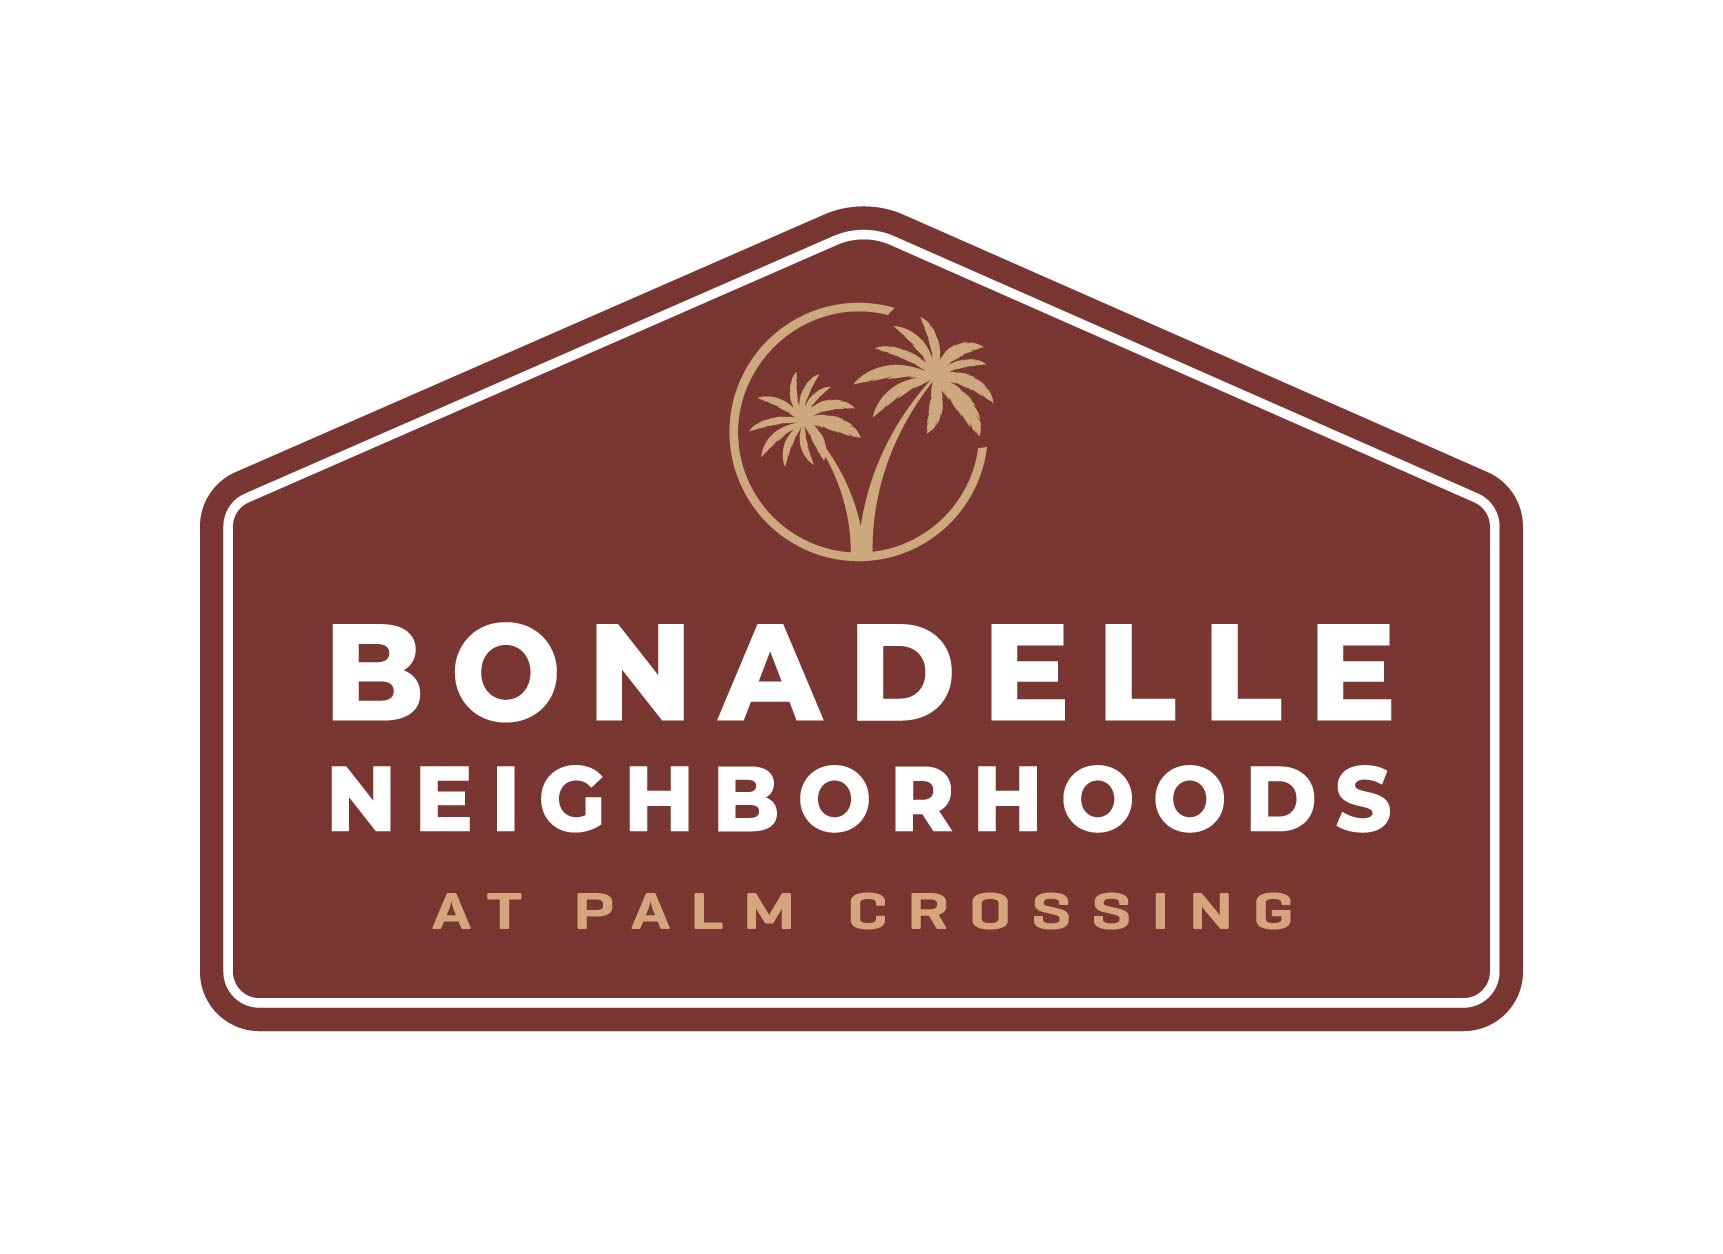 Bonadelle Neighborhoods at Palm Crossing